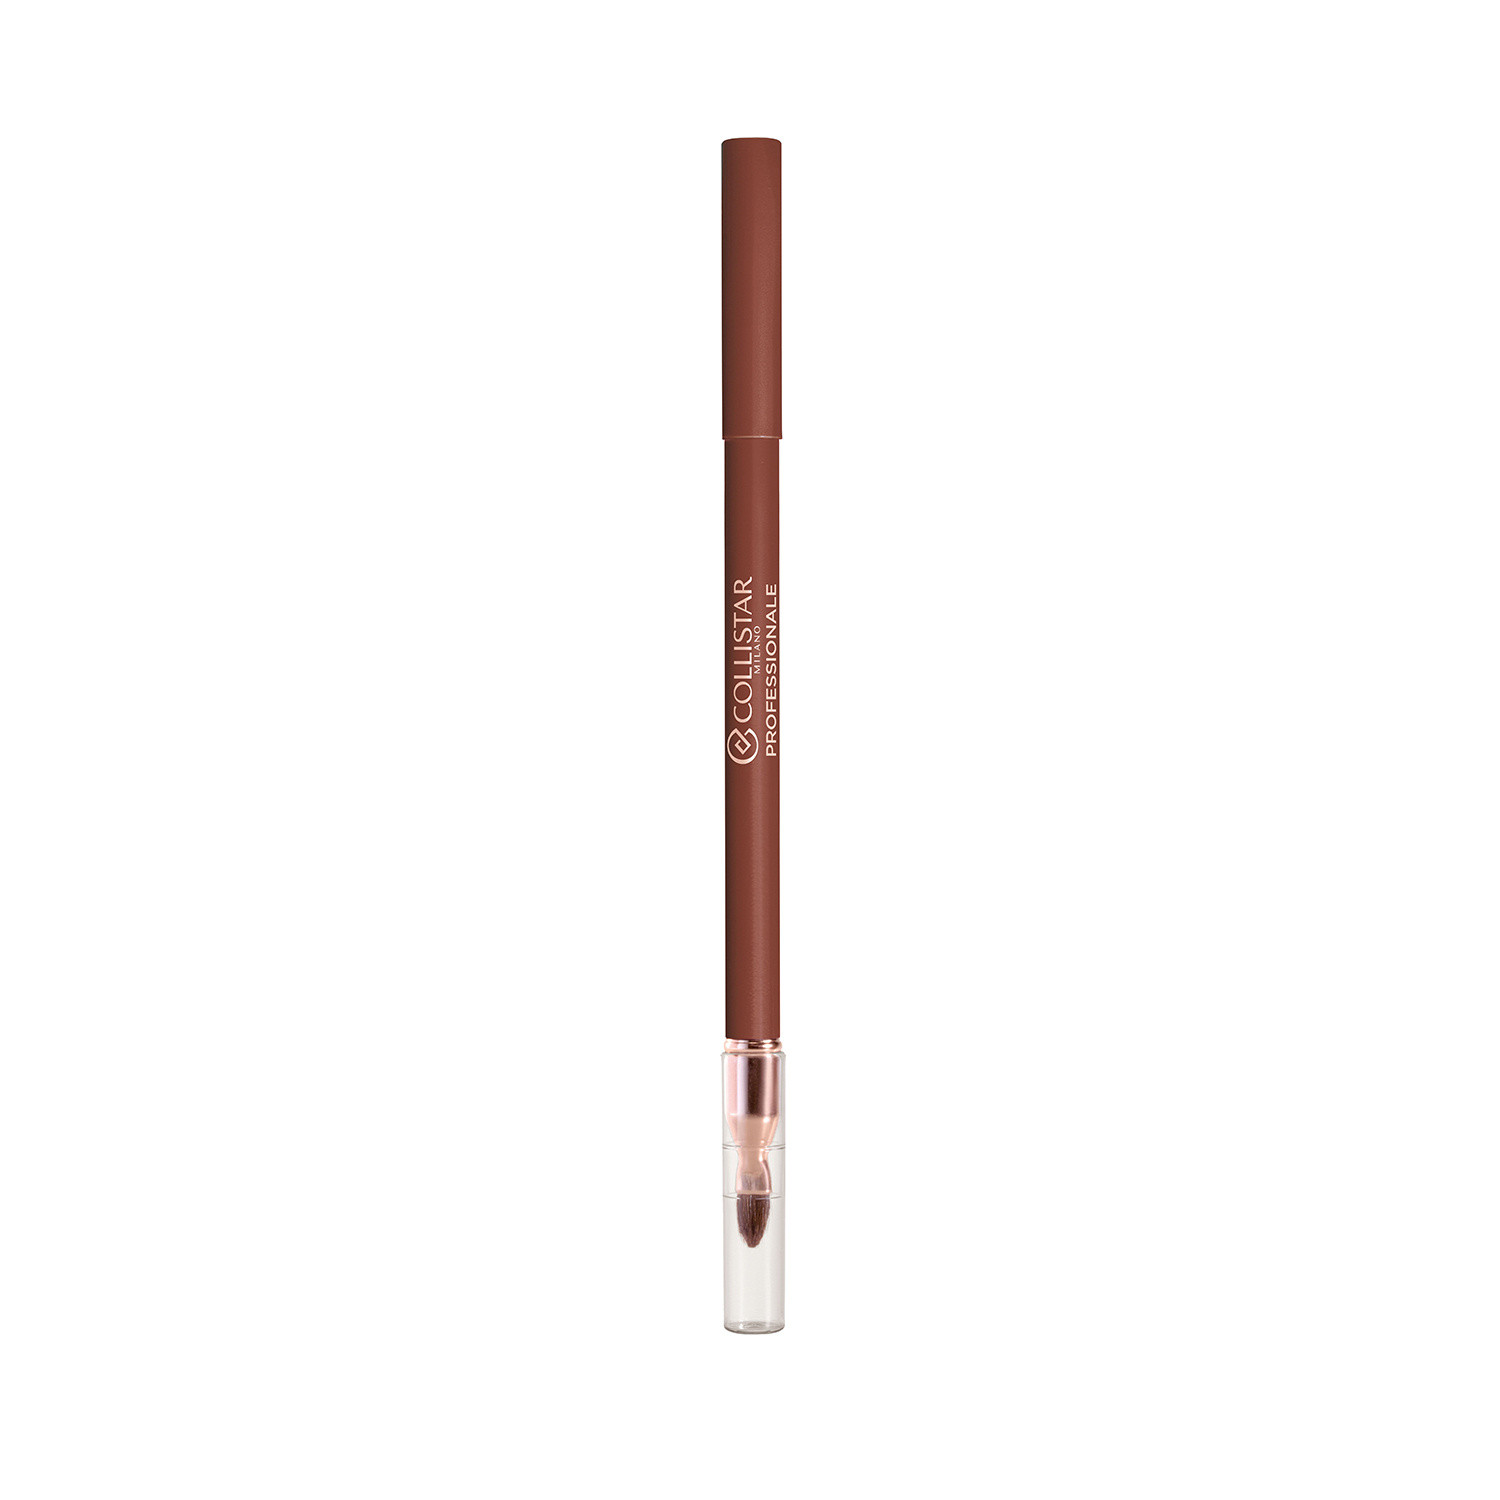 Collistar - Professionale matita labbra lunga durata - 3 Mattone, Rosso mattone, large image number 0